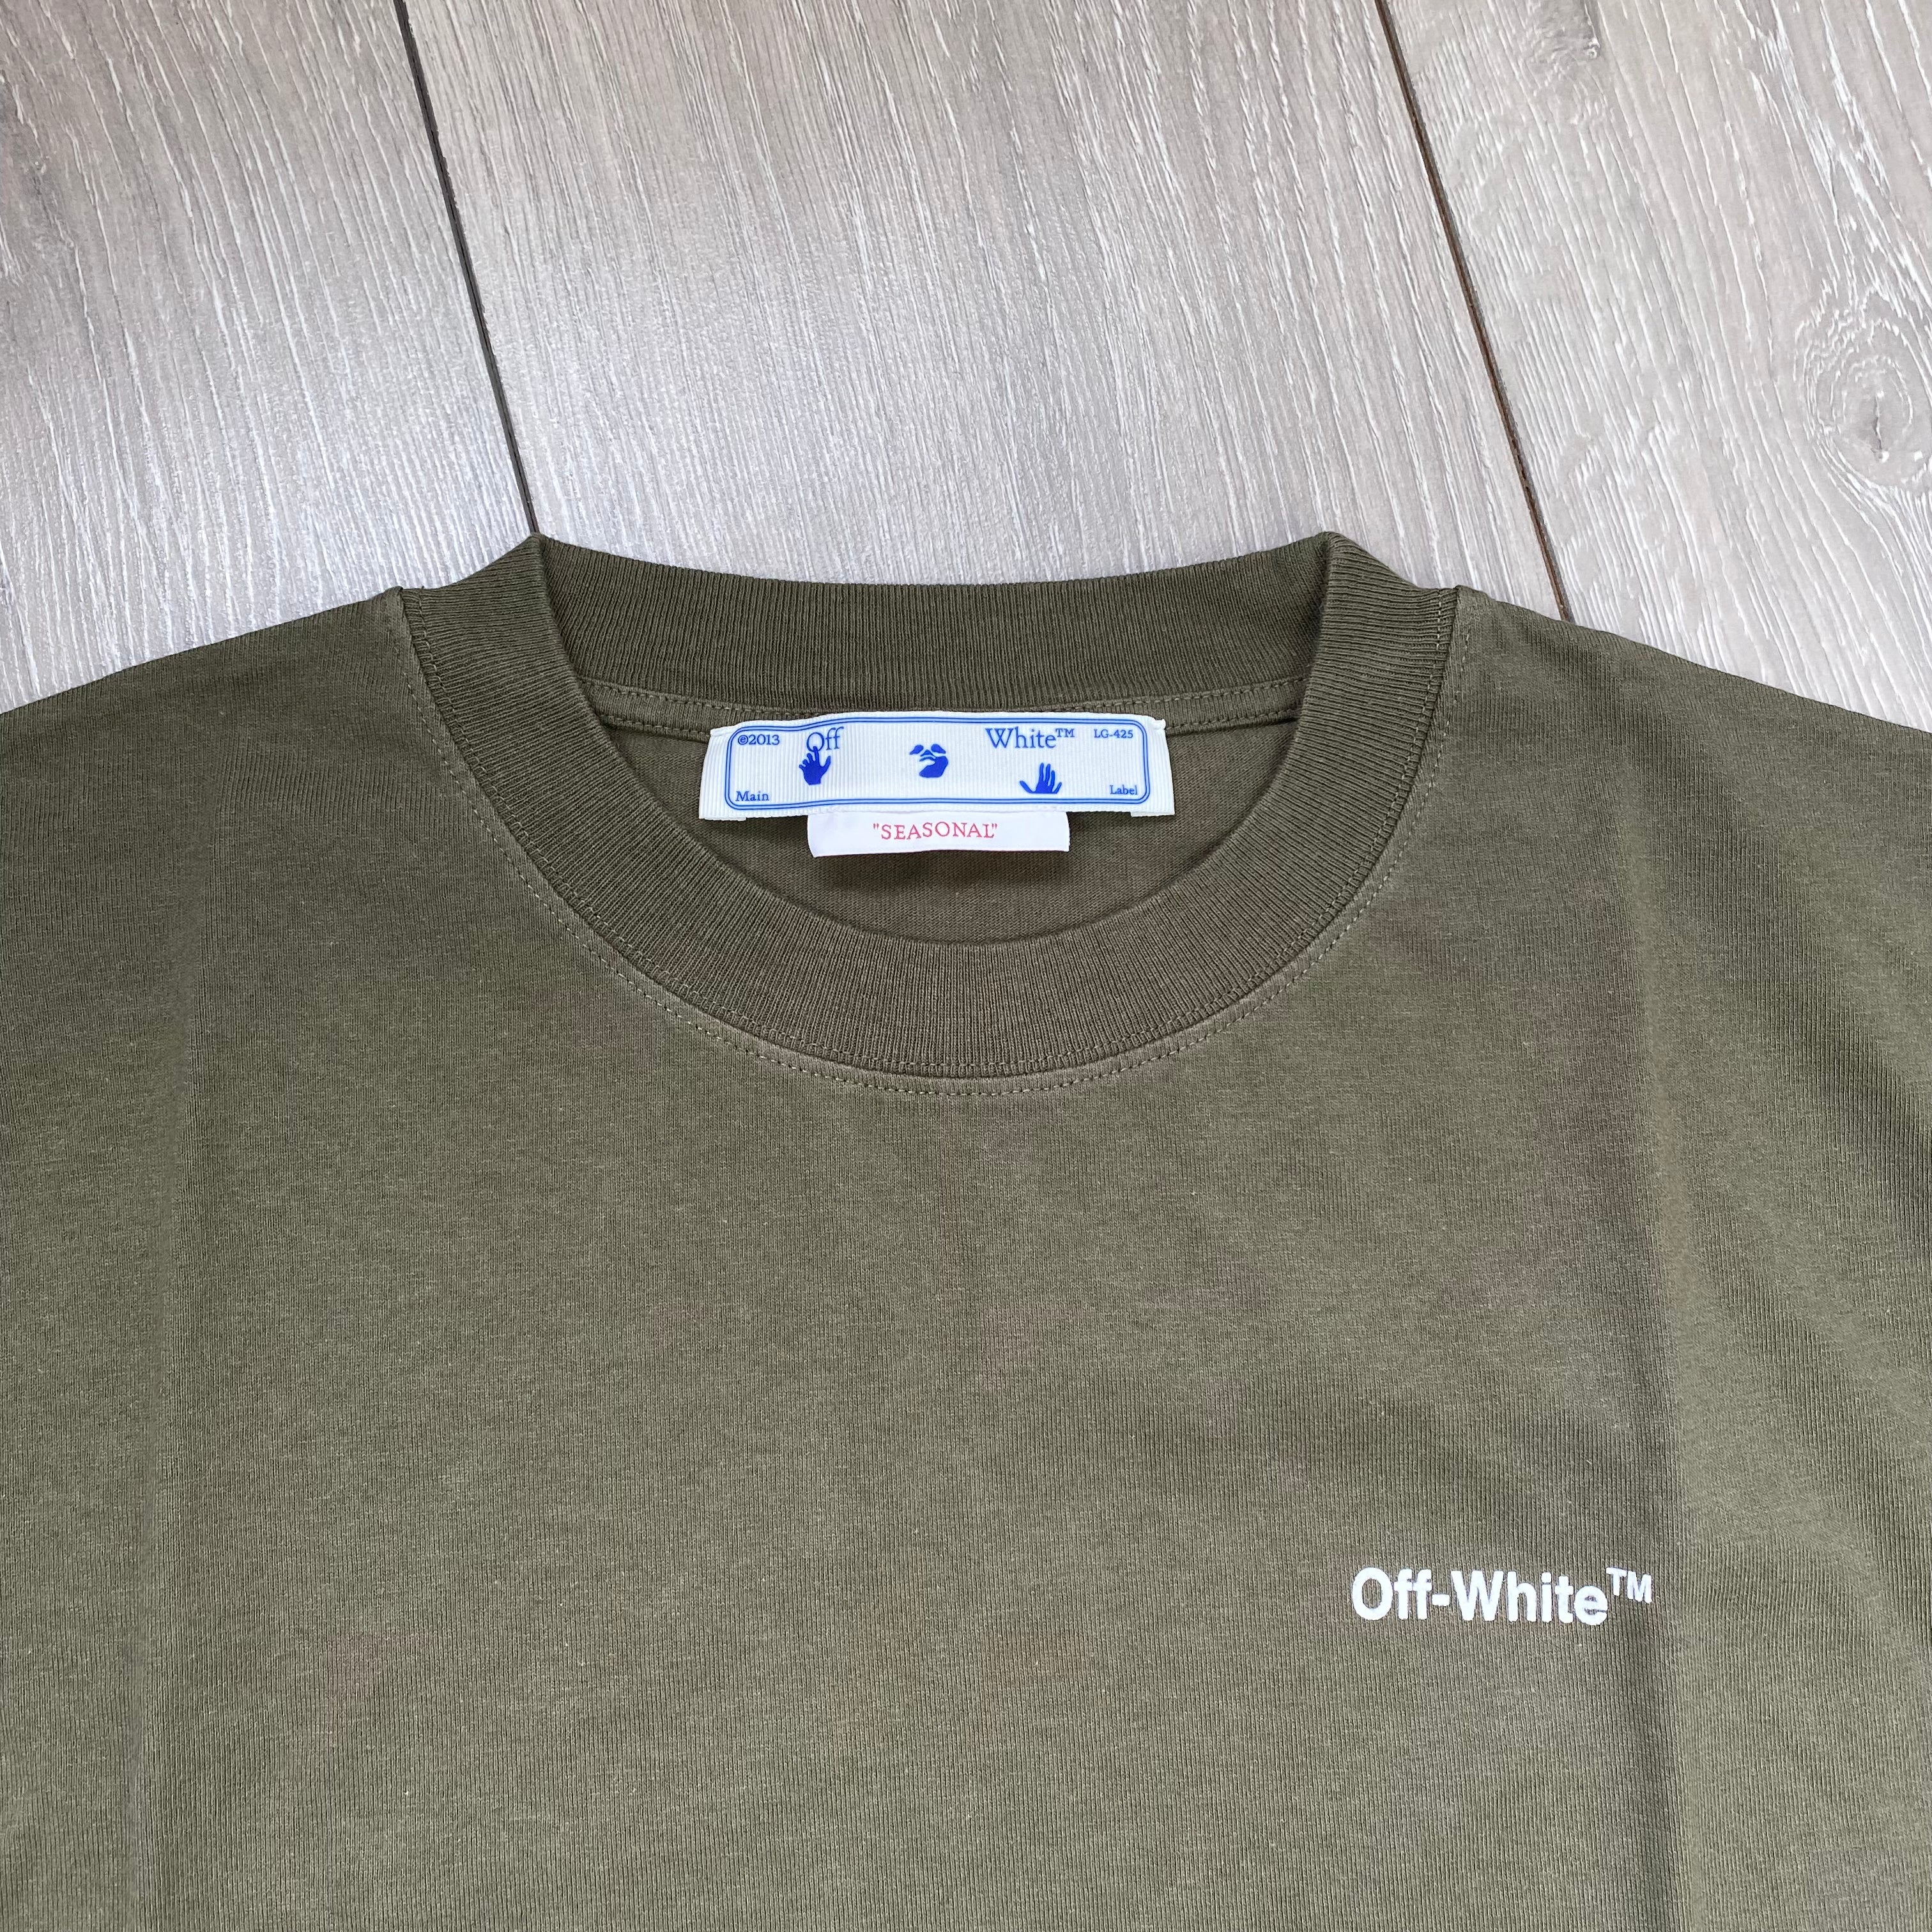 Off-White Brick Arrows T-Shirt